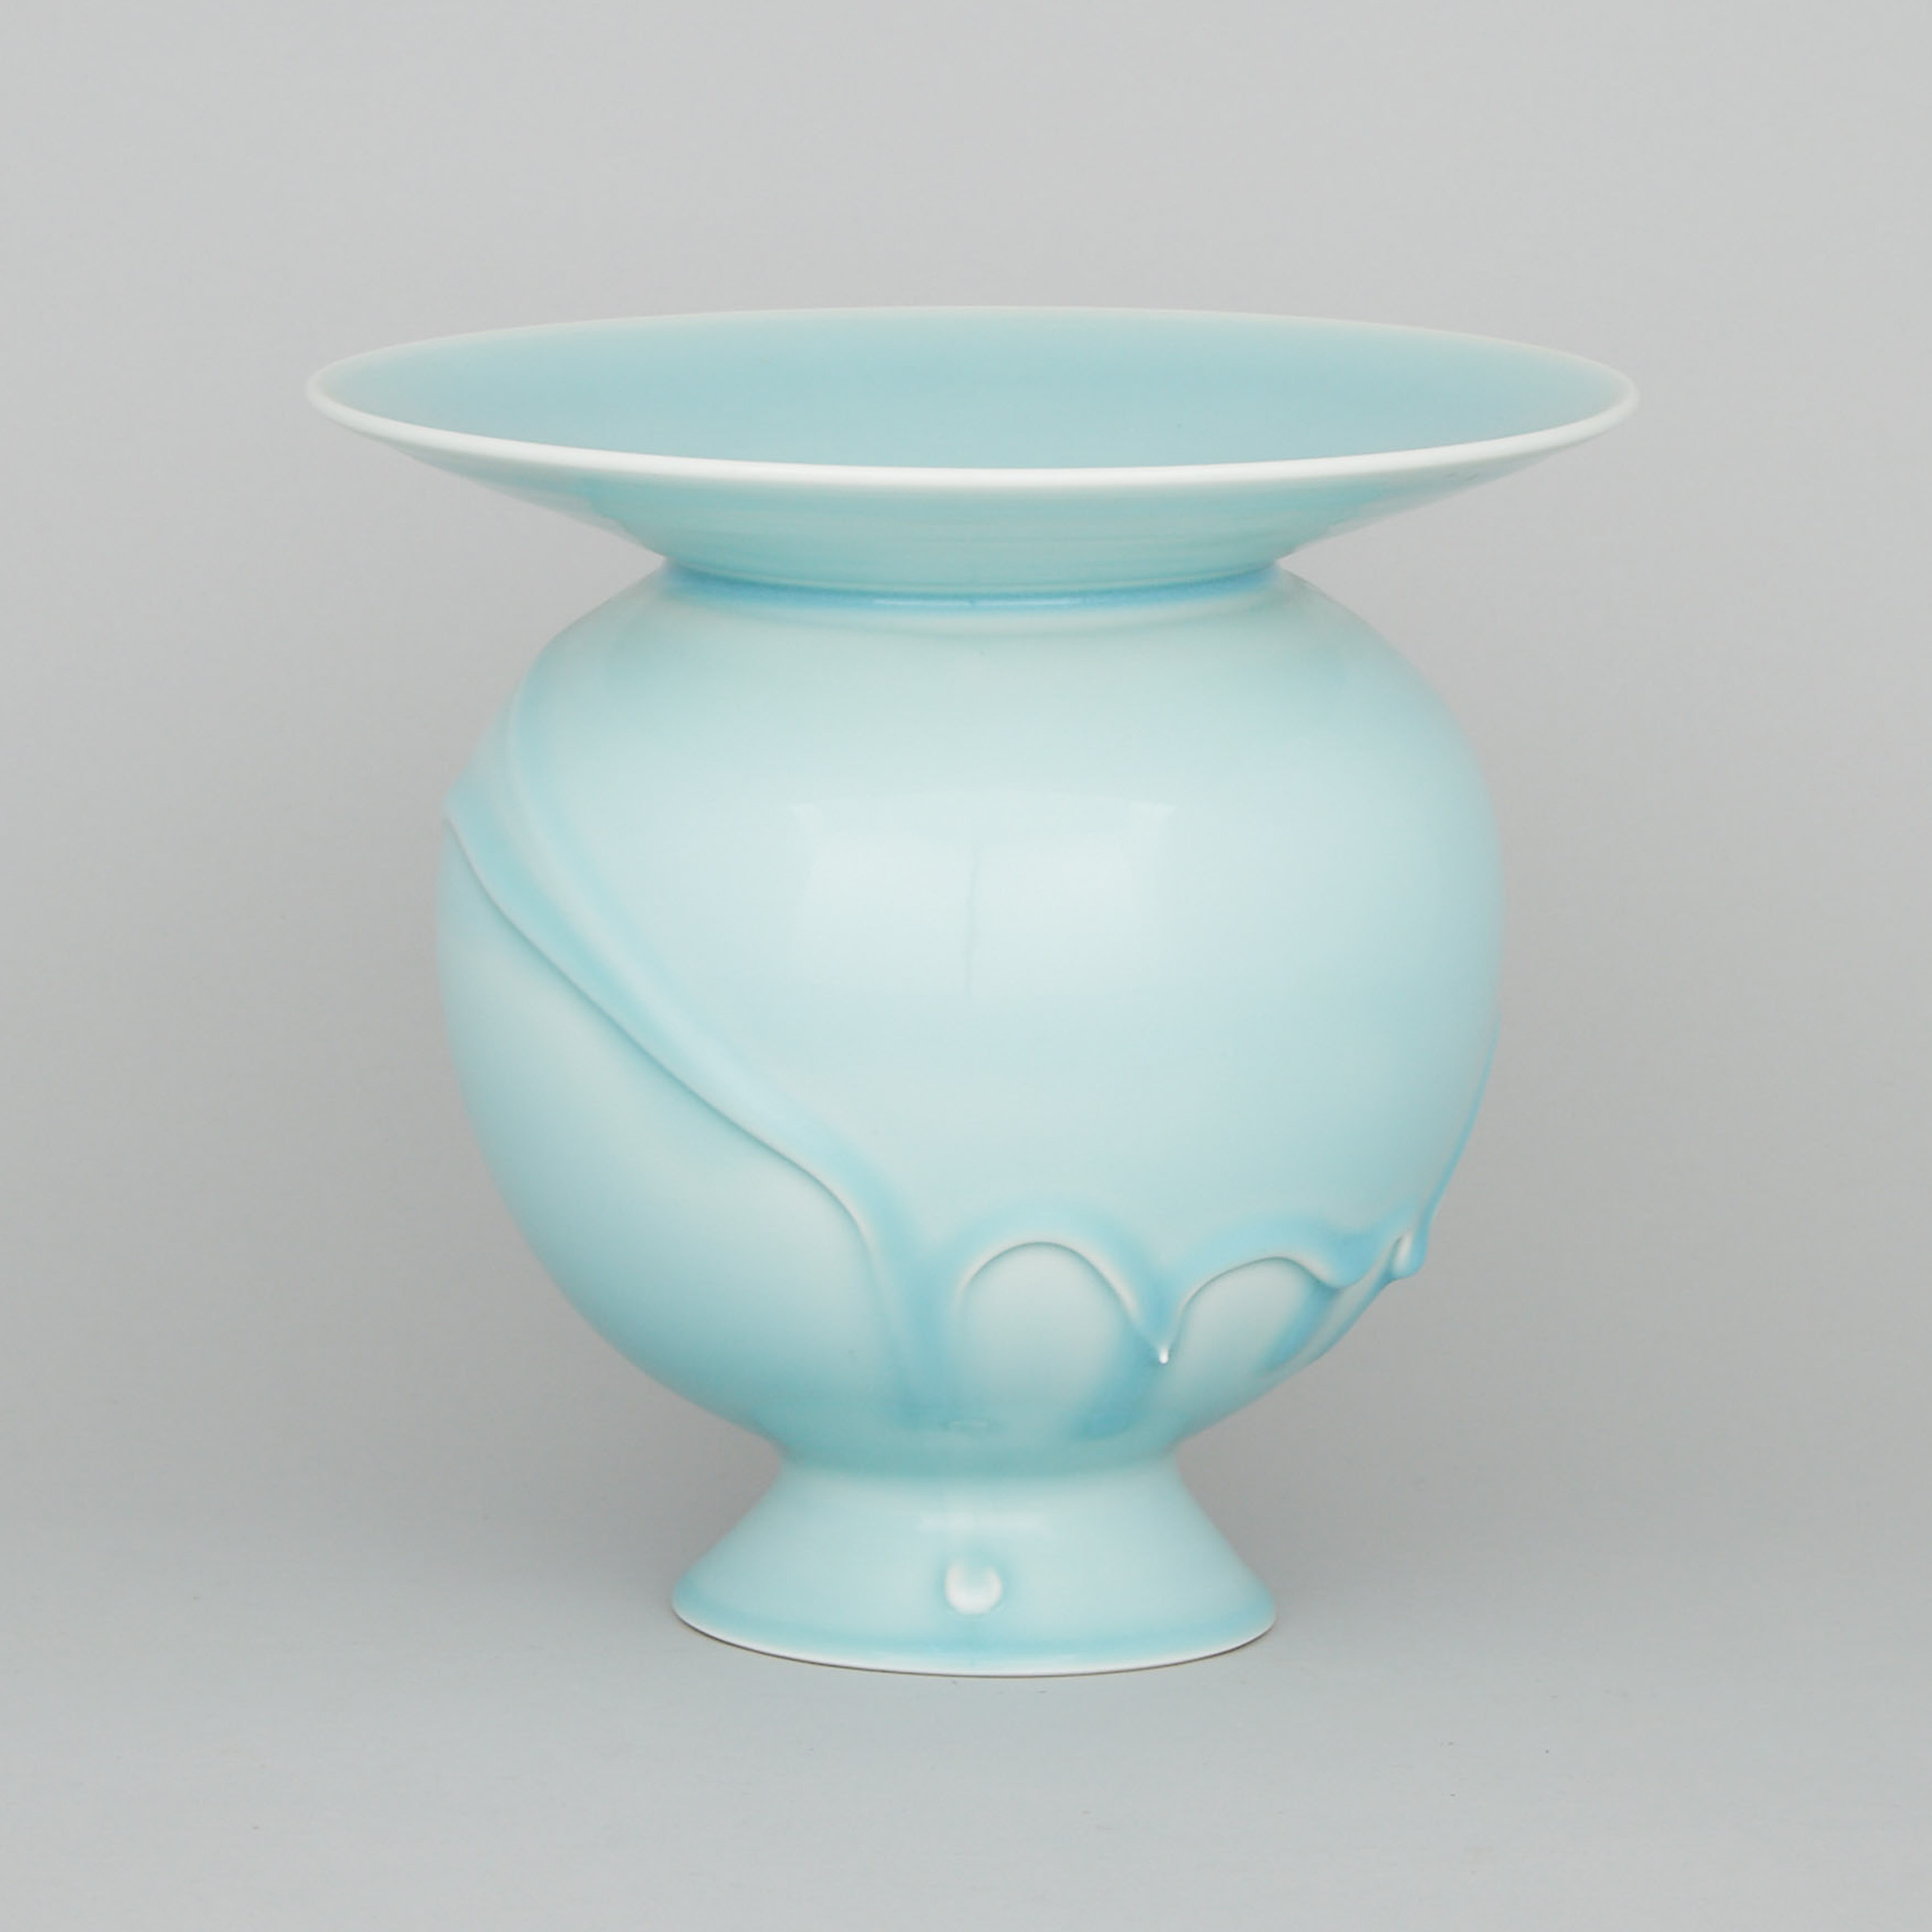 Bill Reddick (Canadian, b.1958), Pale Blue Glazed Vase, 2003